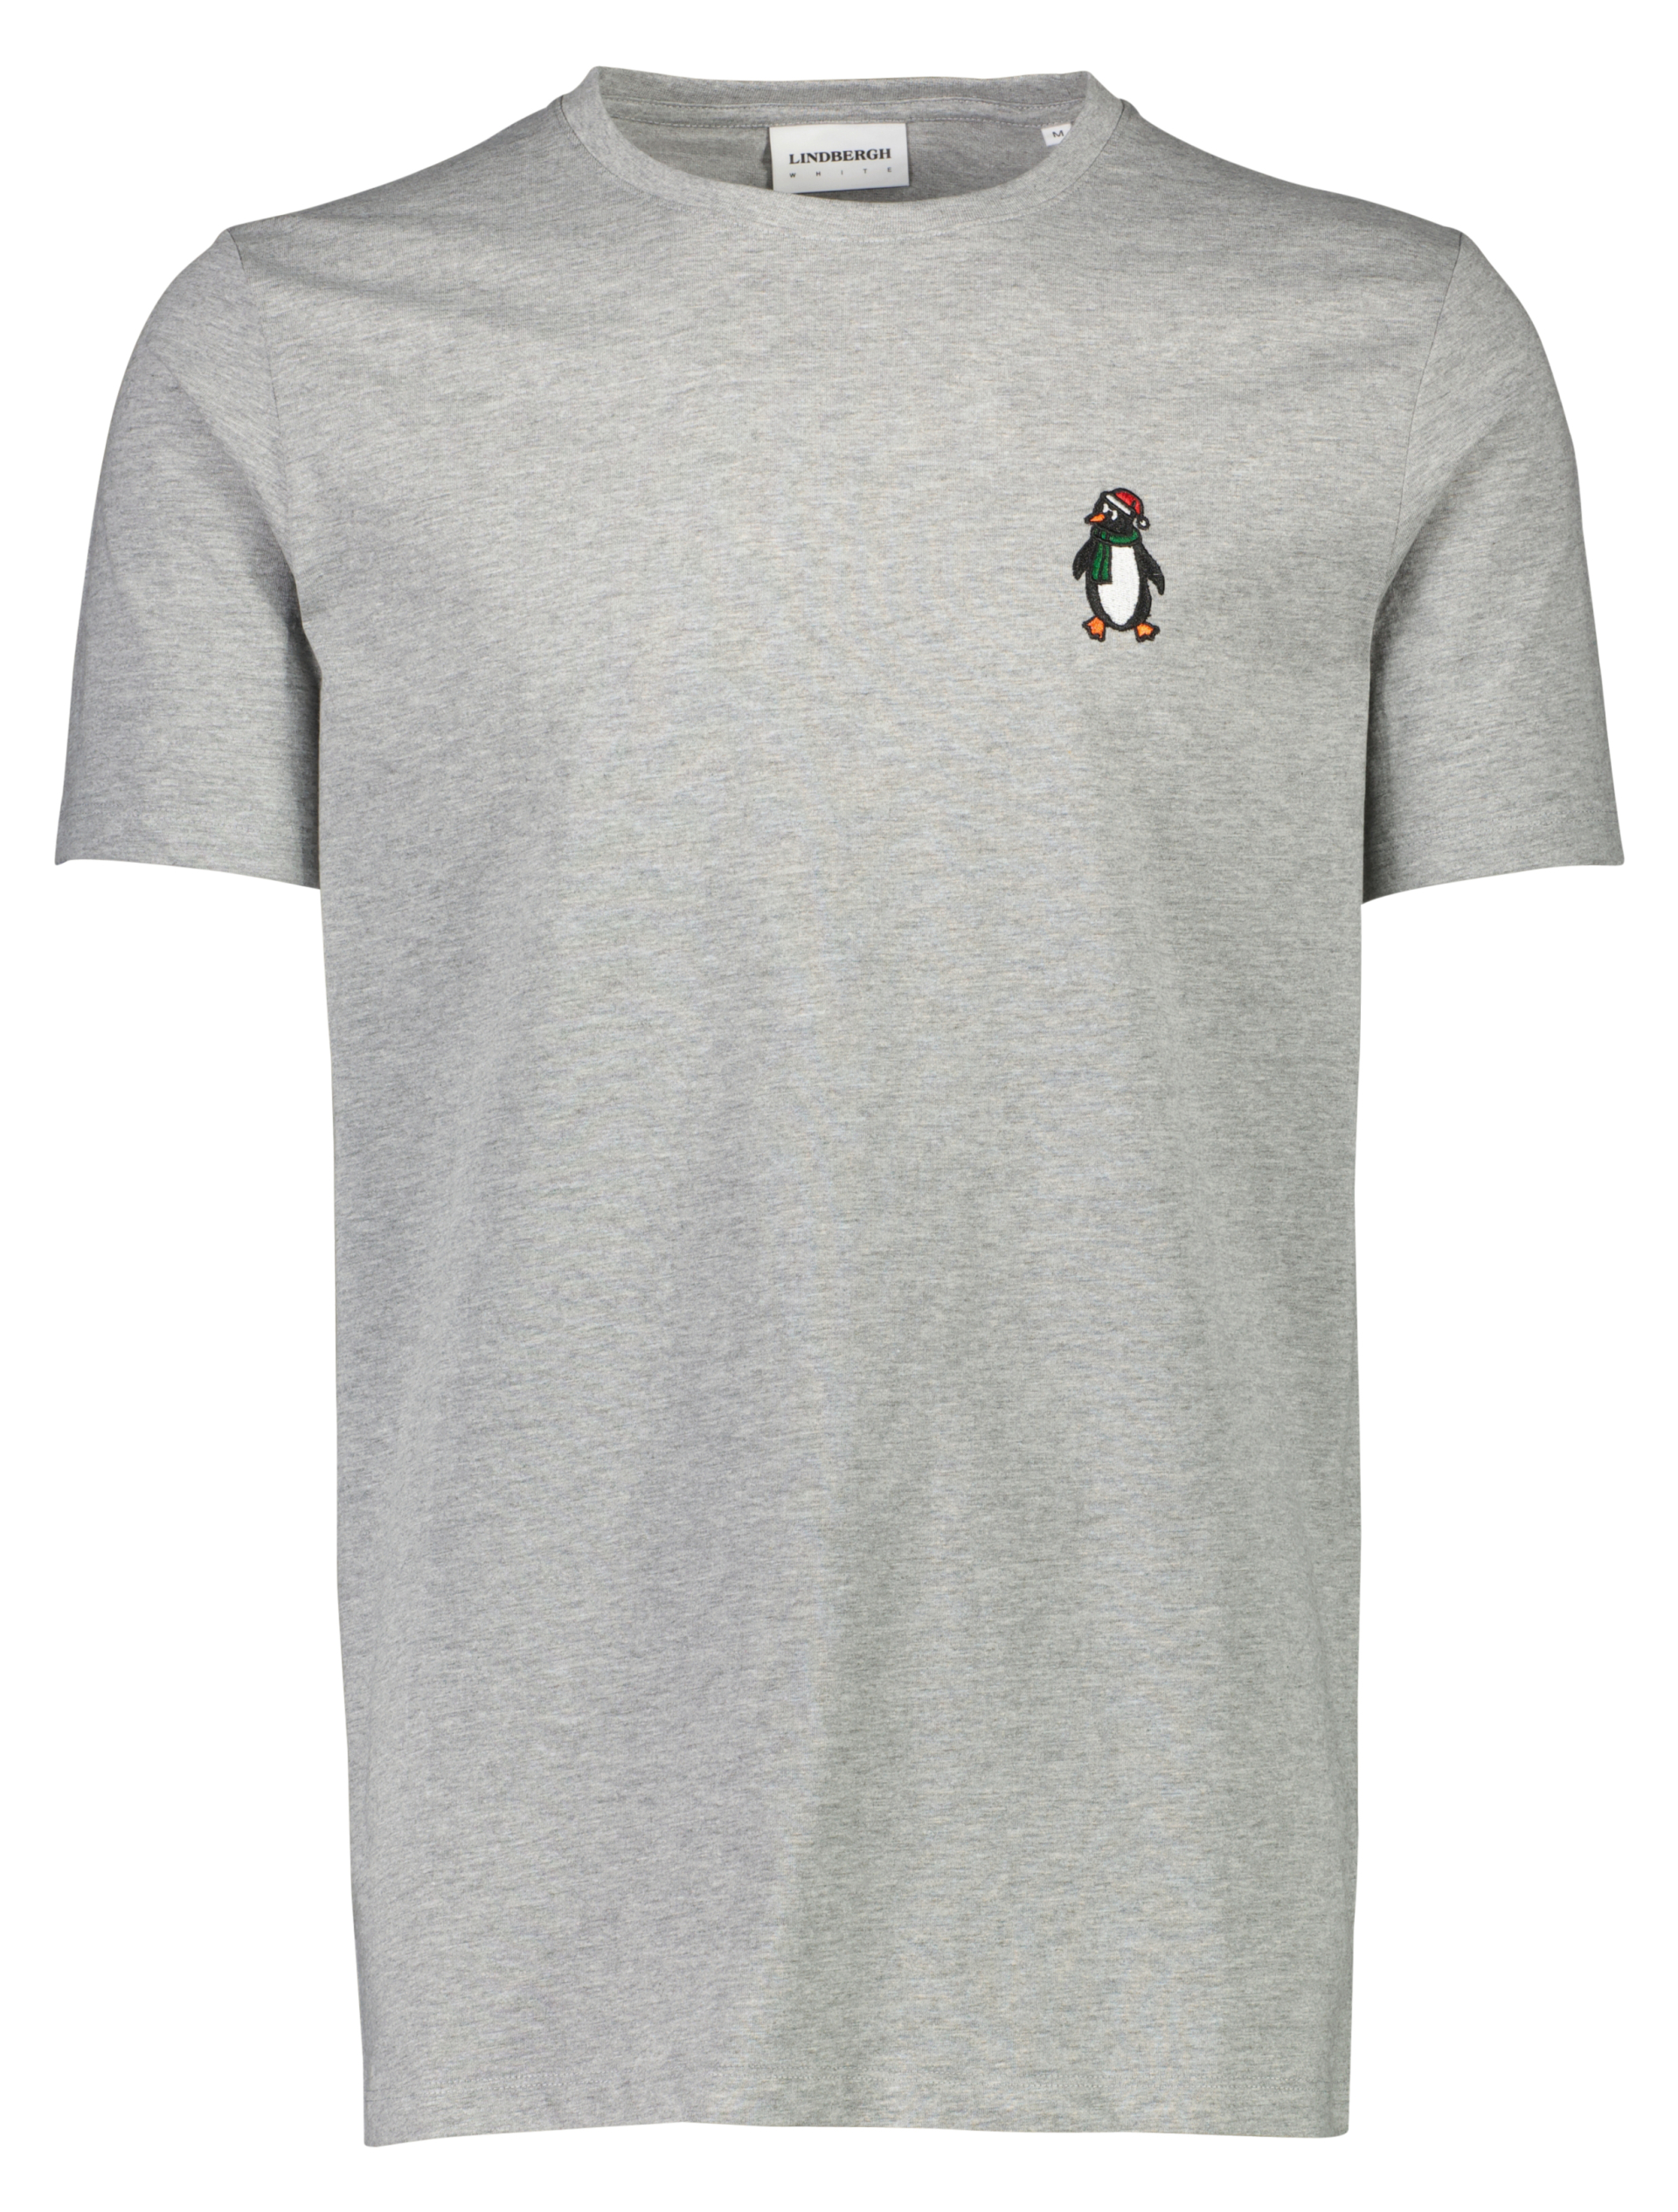 Lindbergh T-shirt grau / grey mel